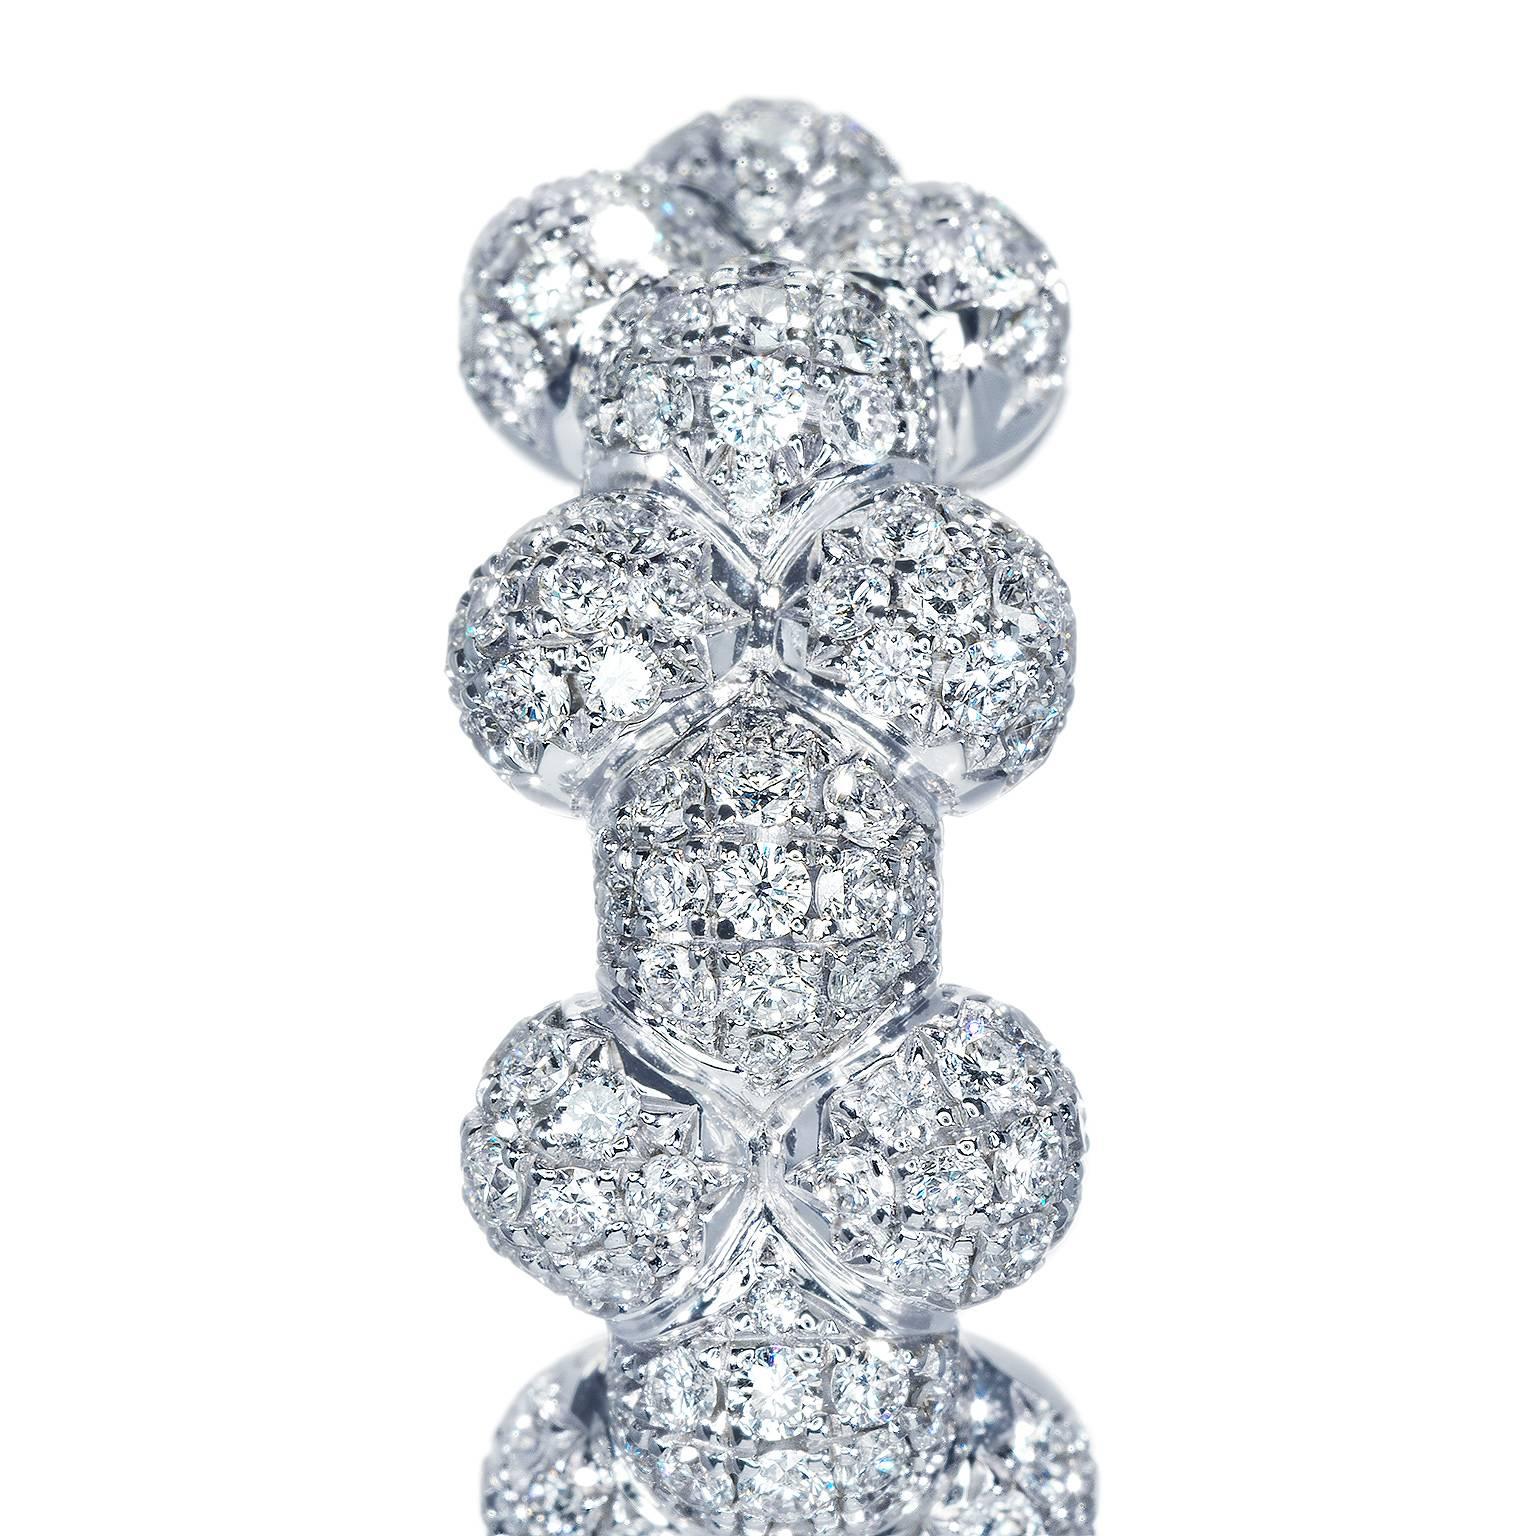 Towe Norlen Celeste 3.98 Carat Contemporary Diamond Cocktail Ring For Sale 5